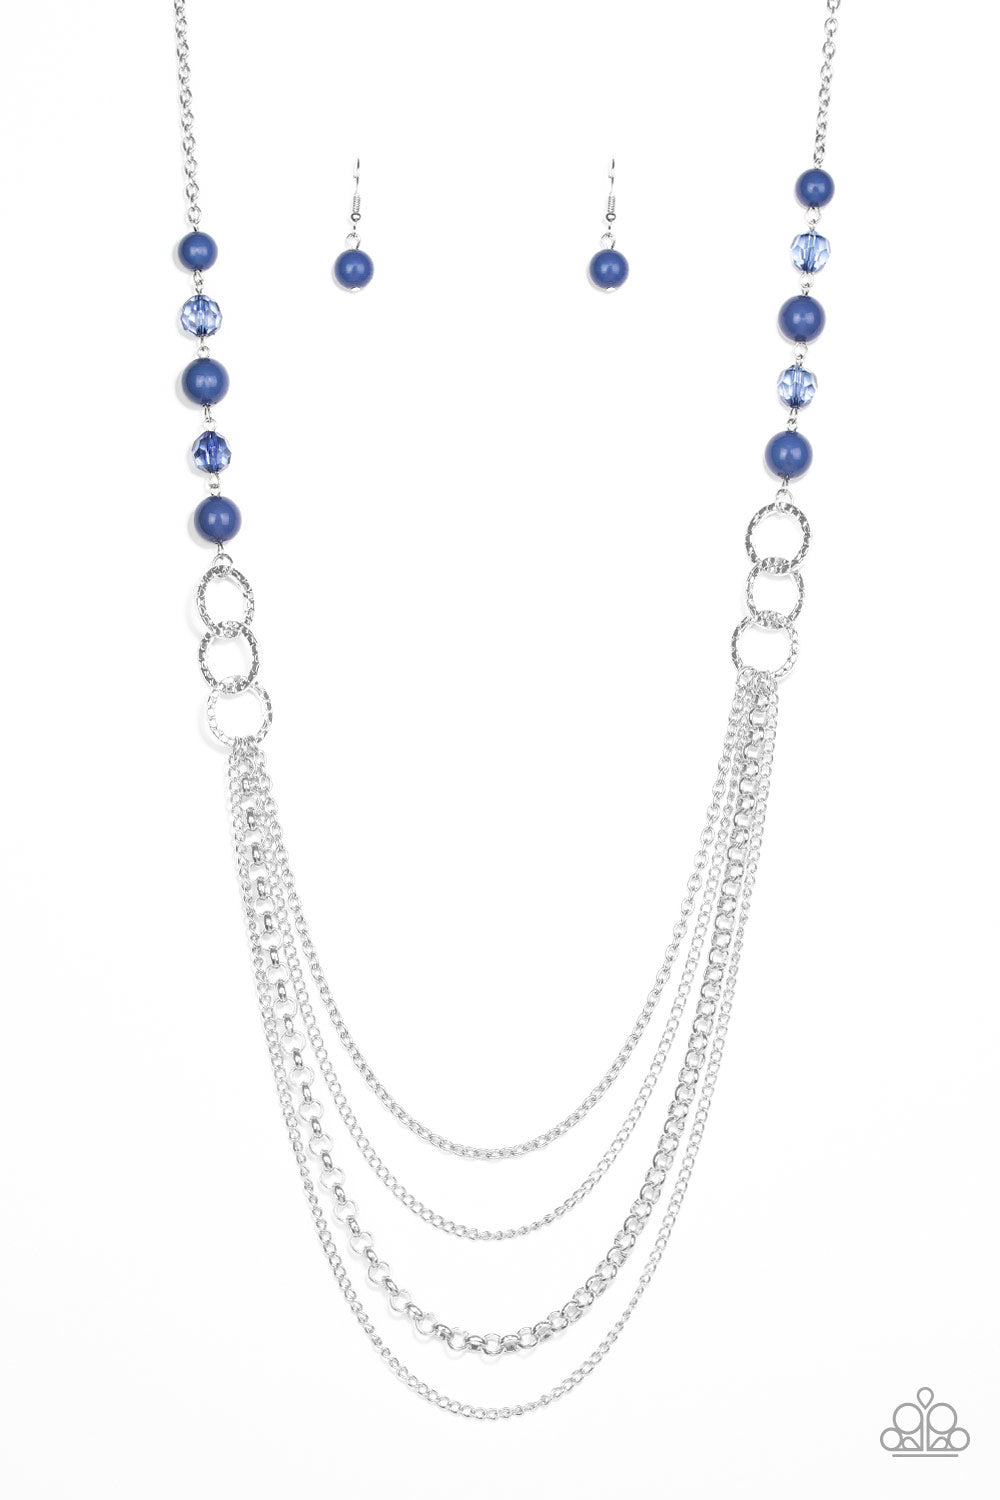 Paparazzi necklace - Vividly Vivid - Blue